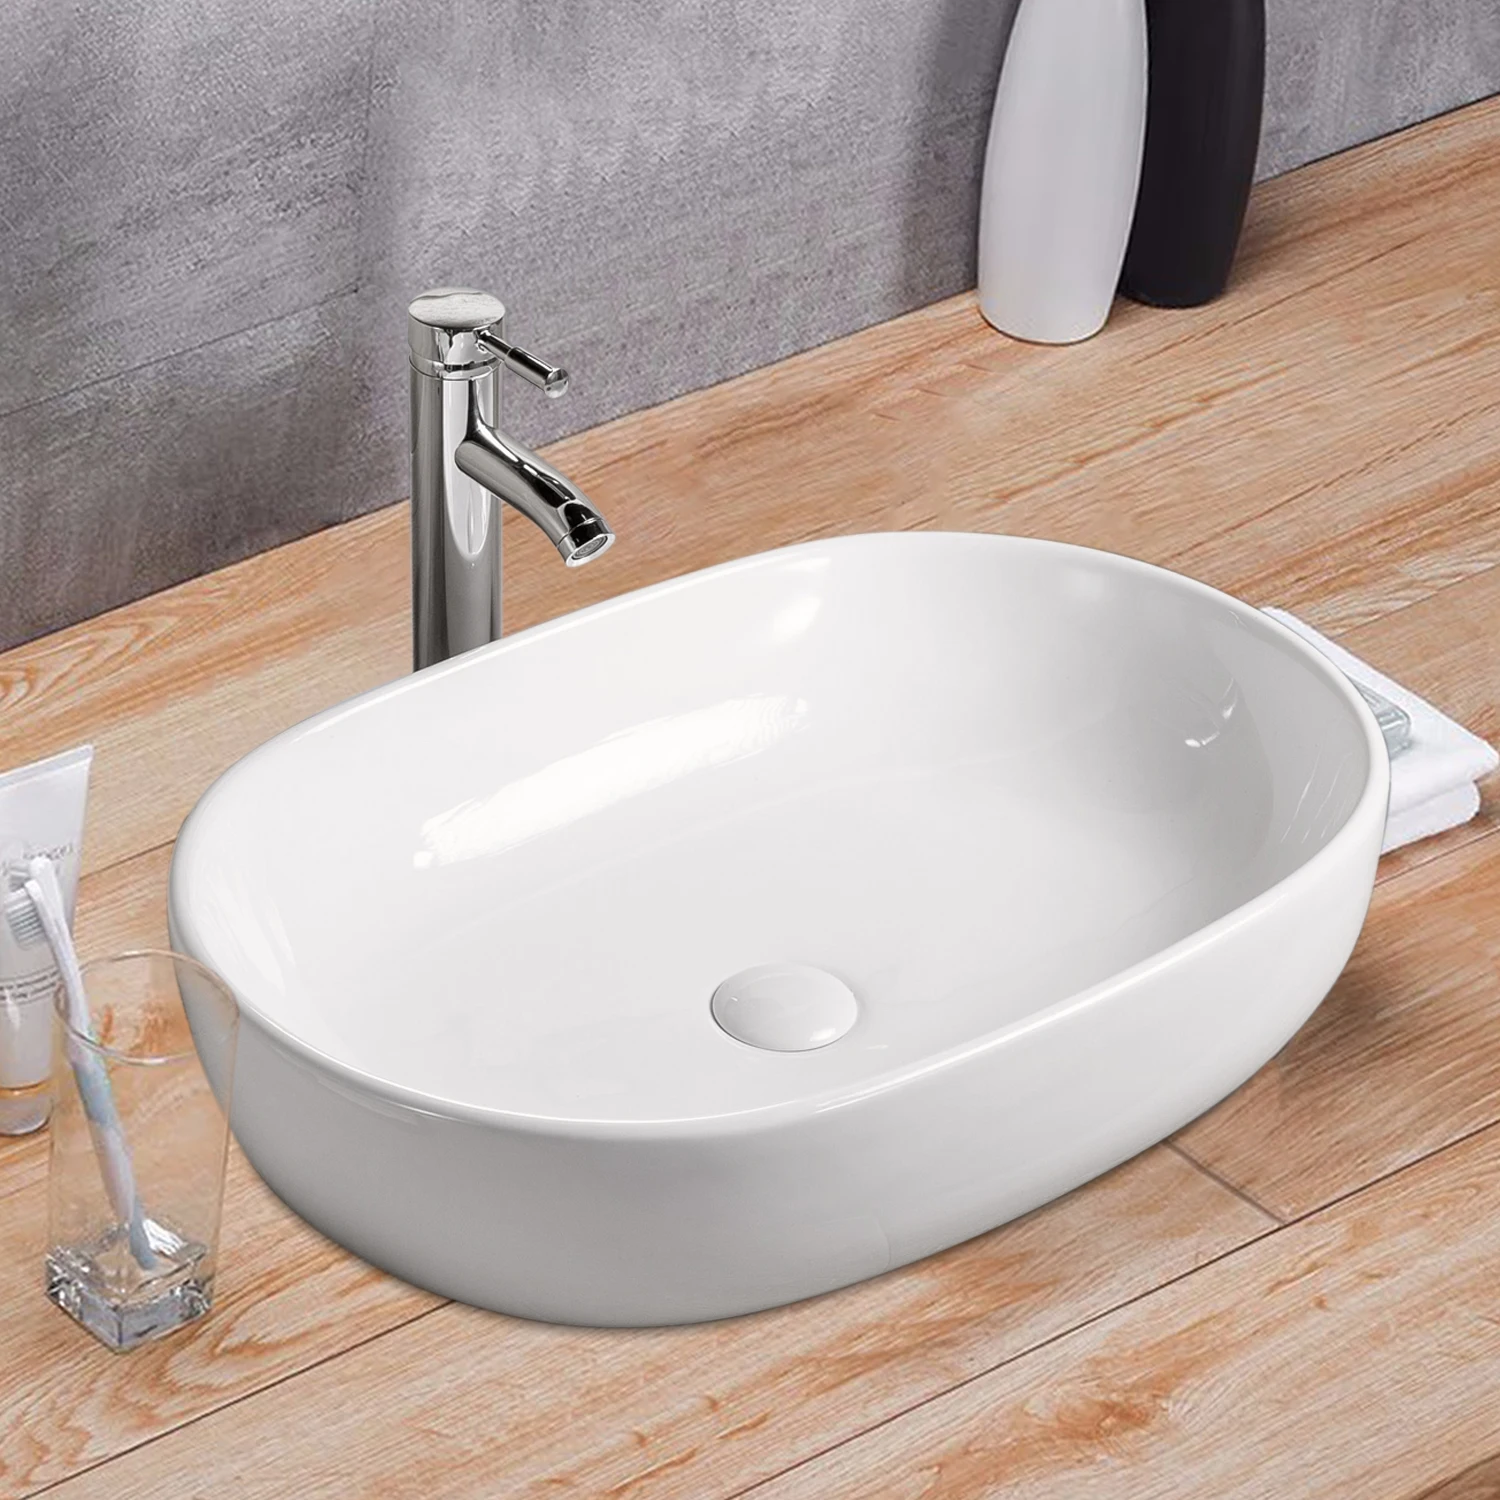 Rectangular White Ceramic Vessel Bathroom Sink Basin Above Counter Installation